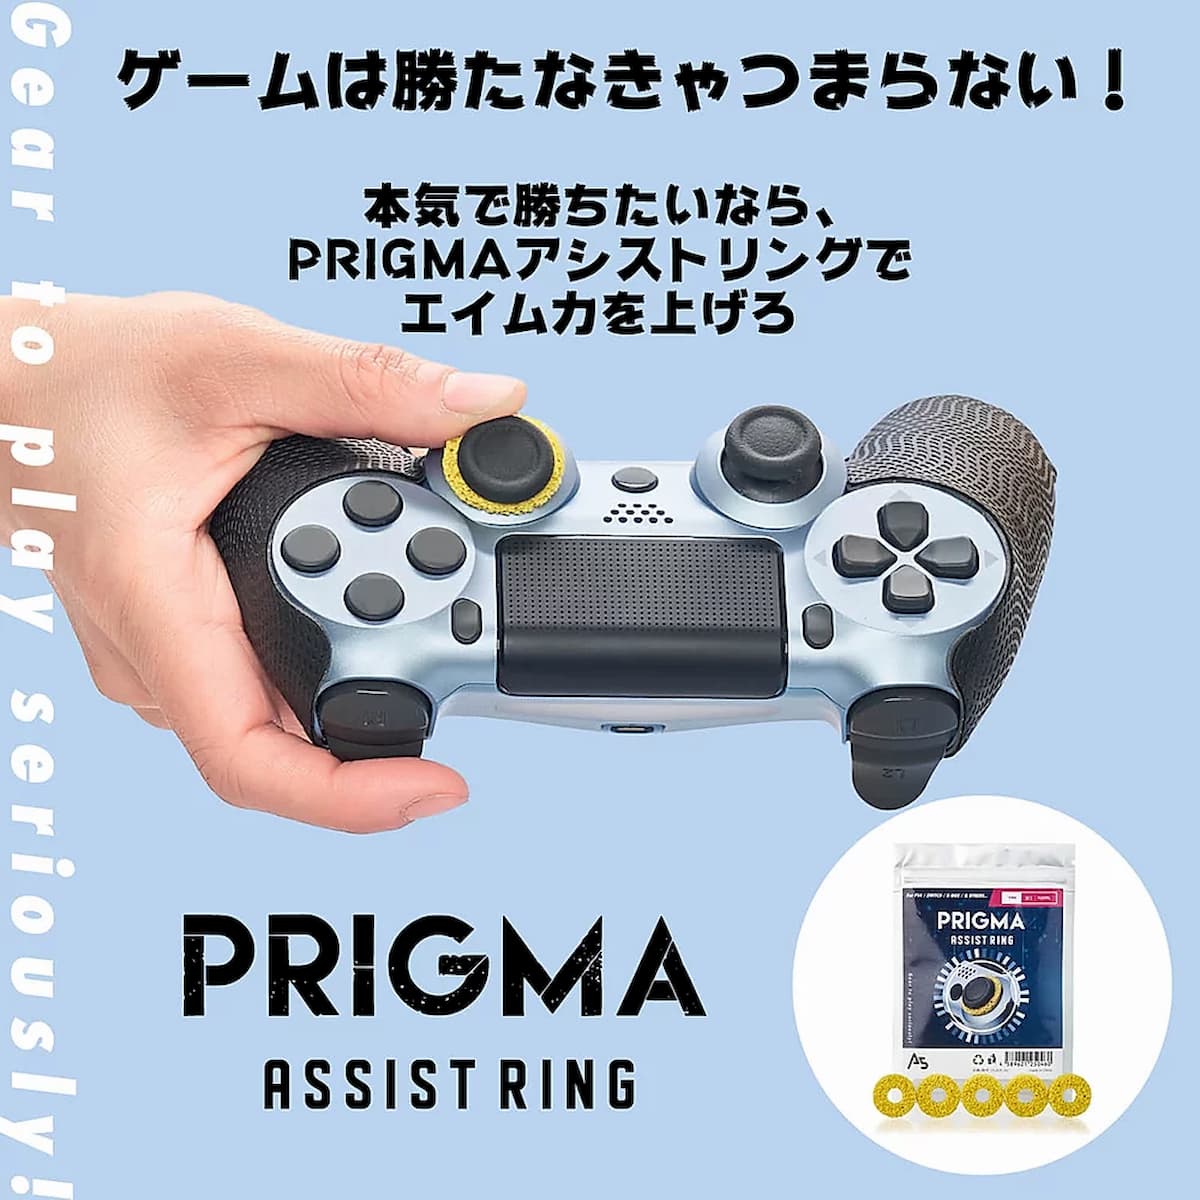 PRIGMA / 協助